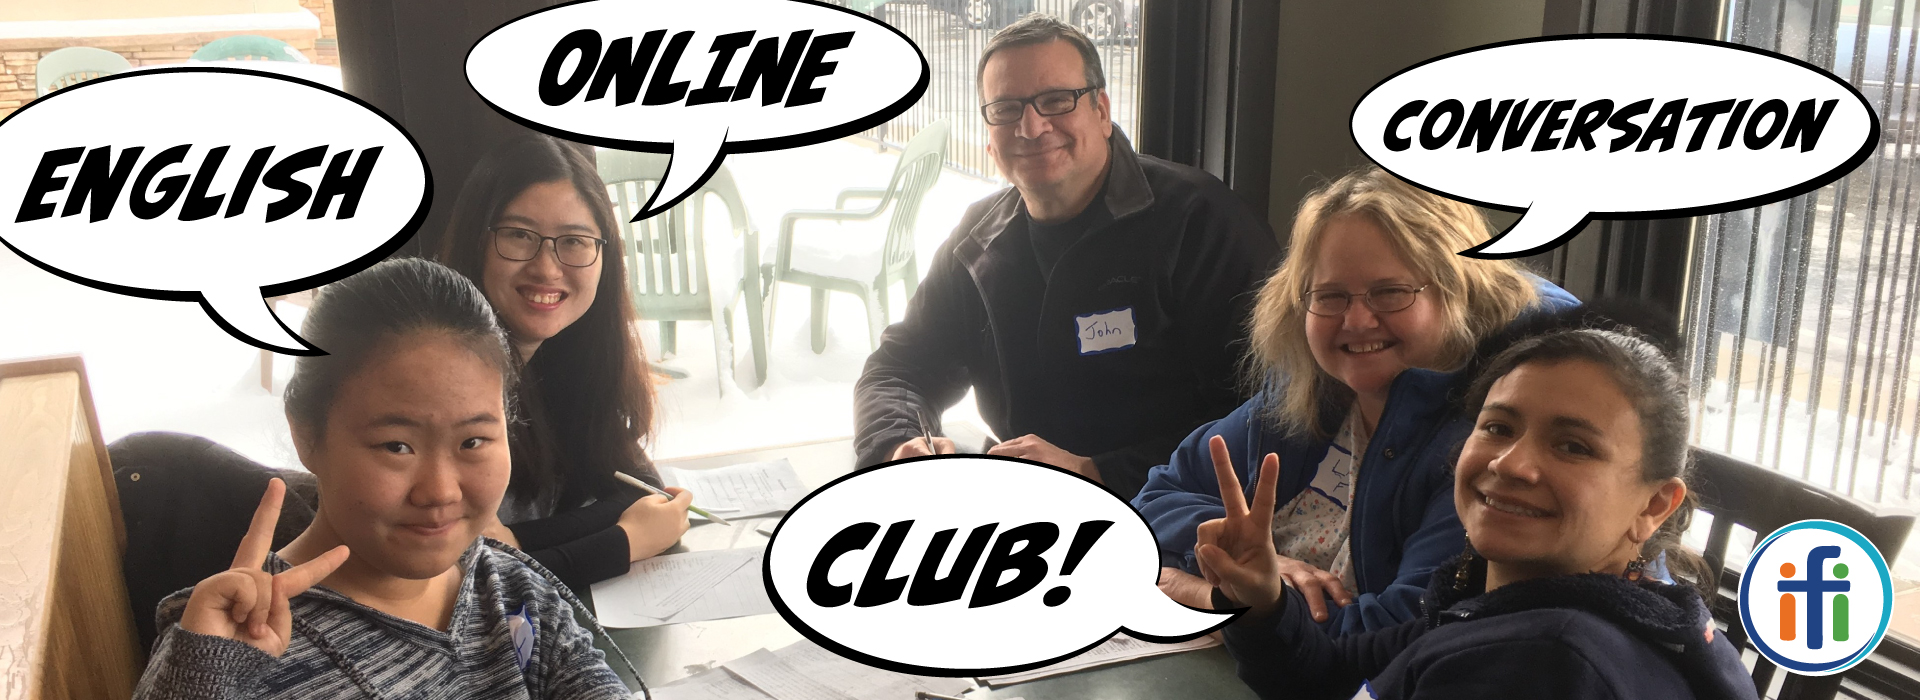 ONLINE English Conversation Club, Saturdays 10AM